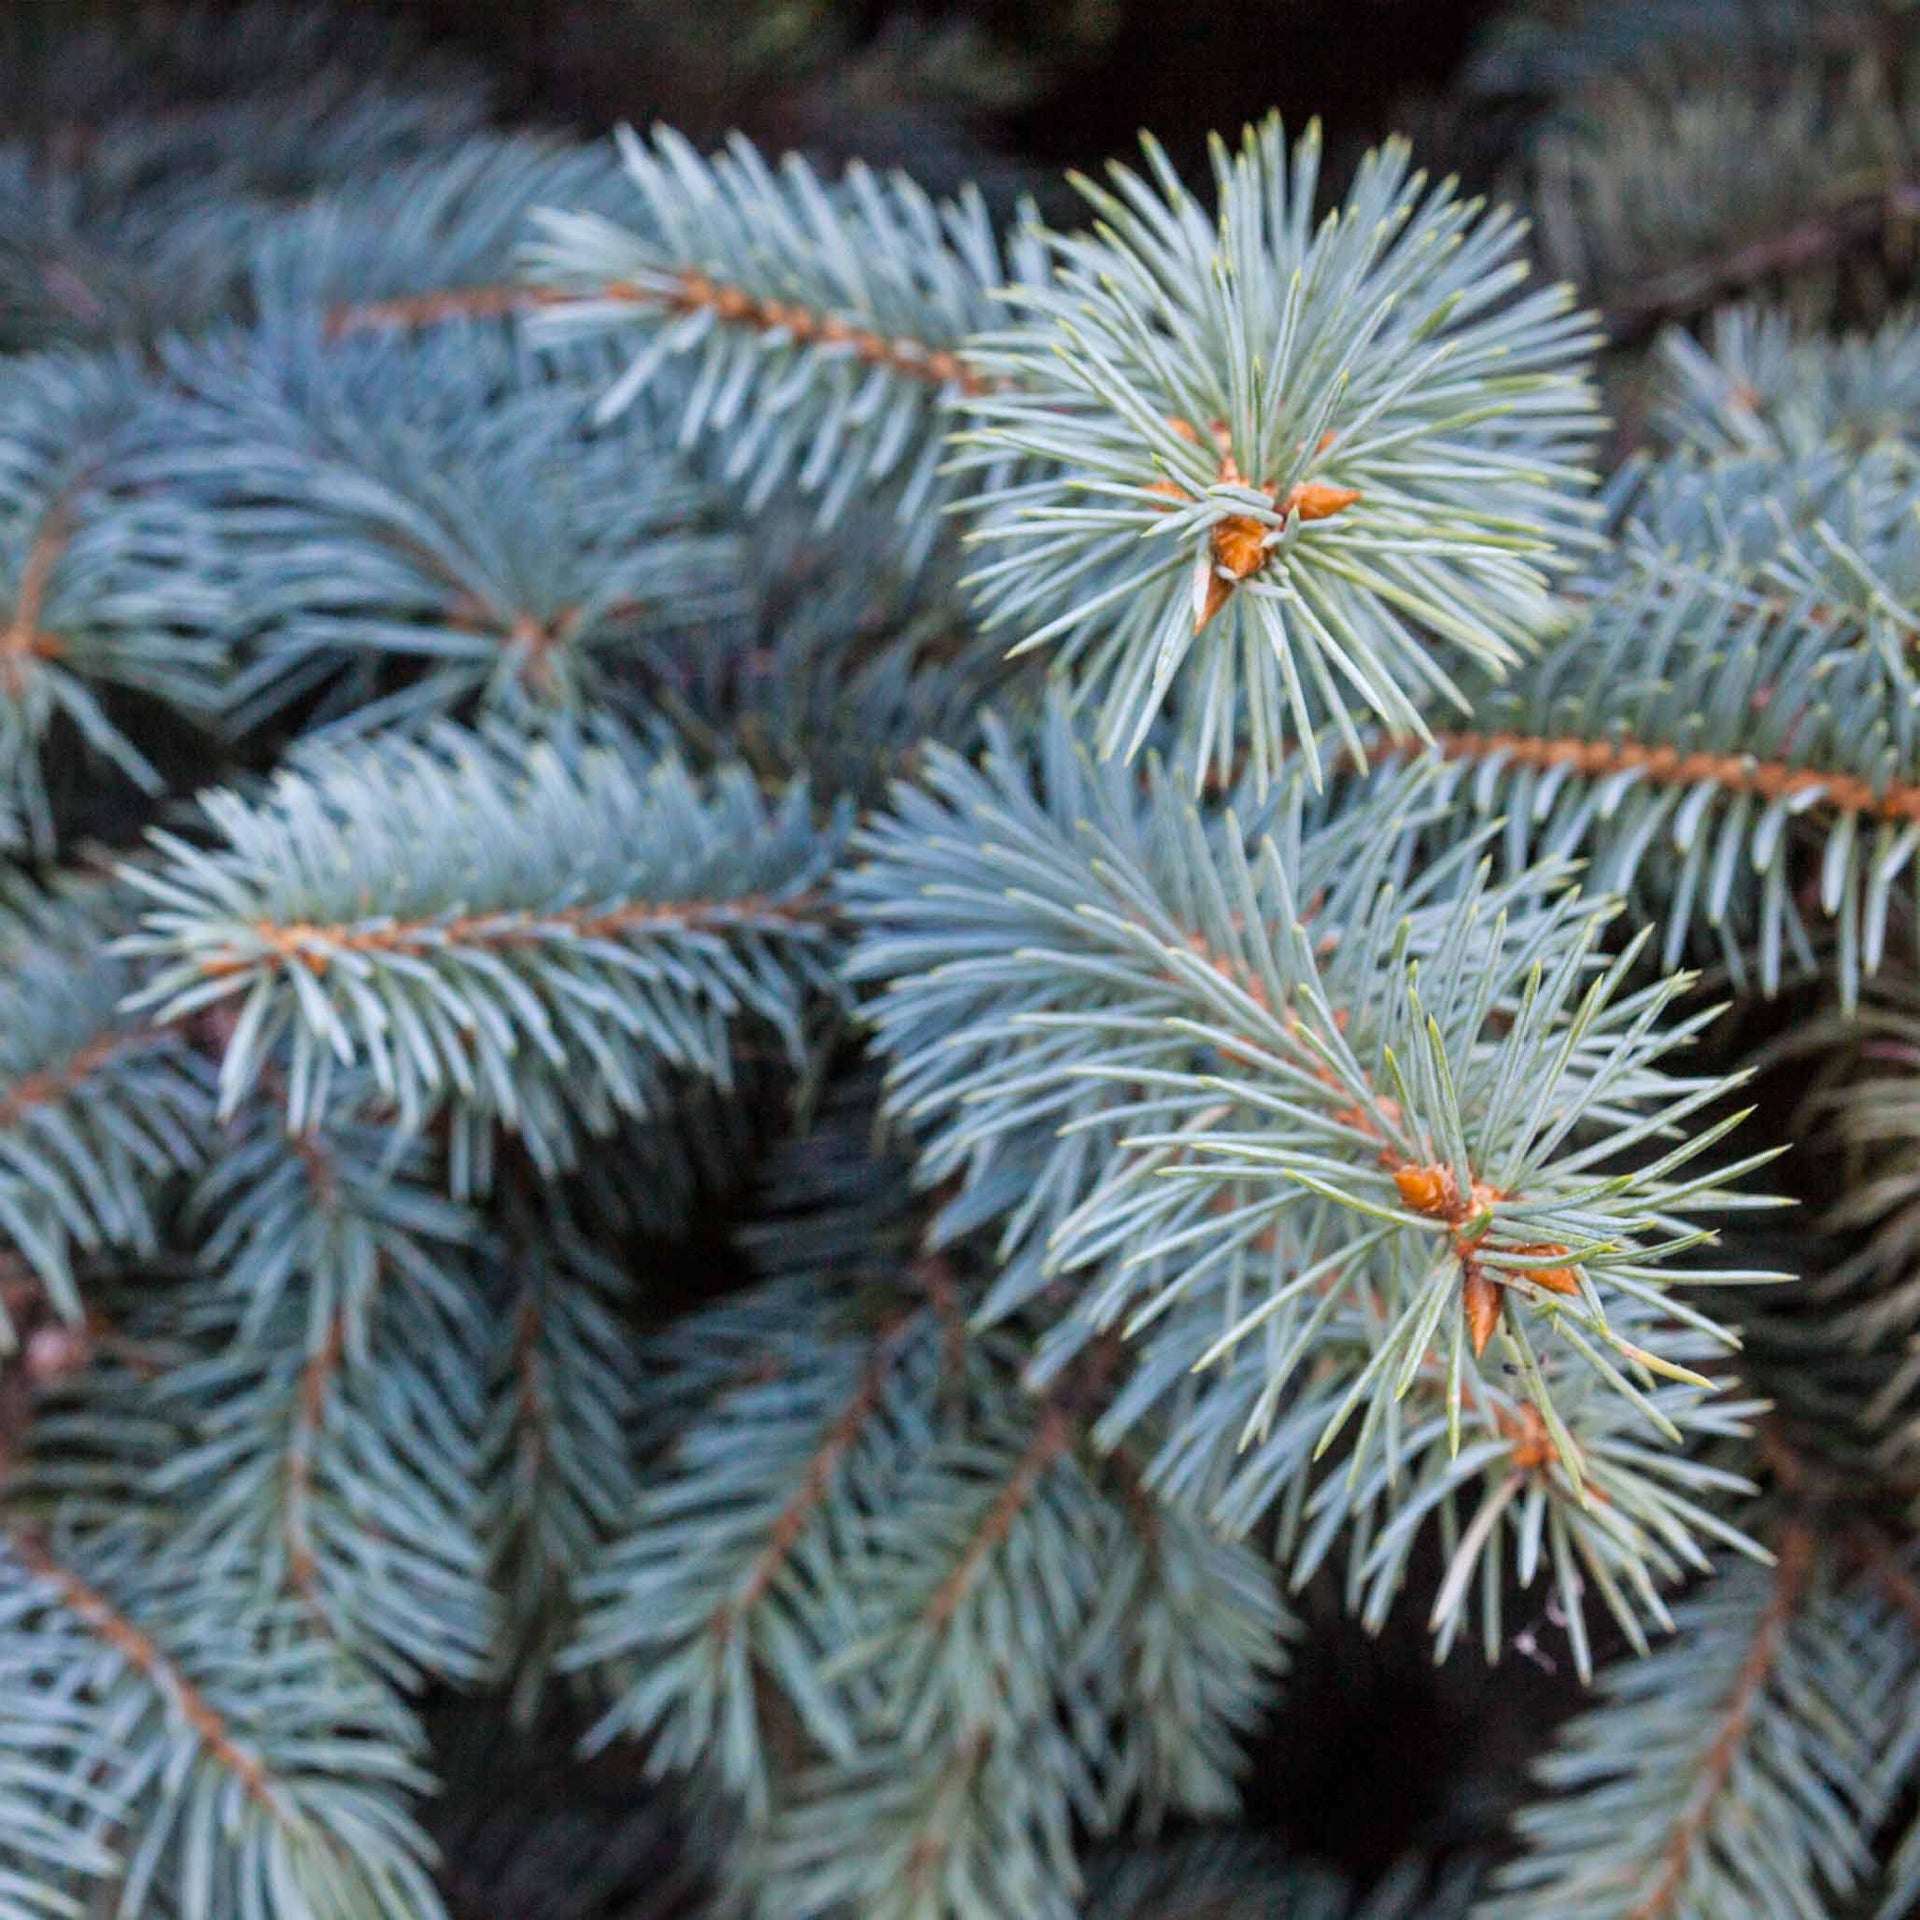 Baby Blue Spruce